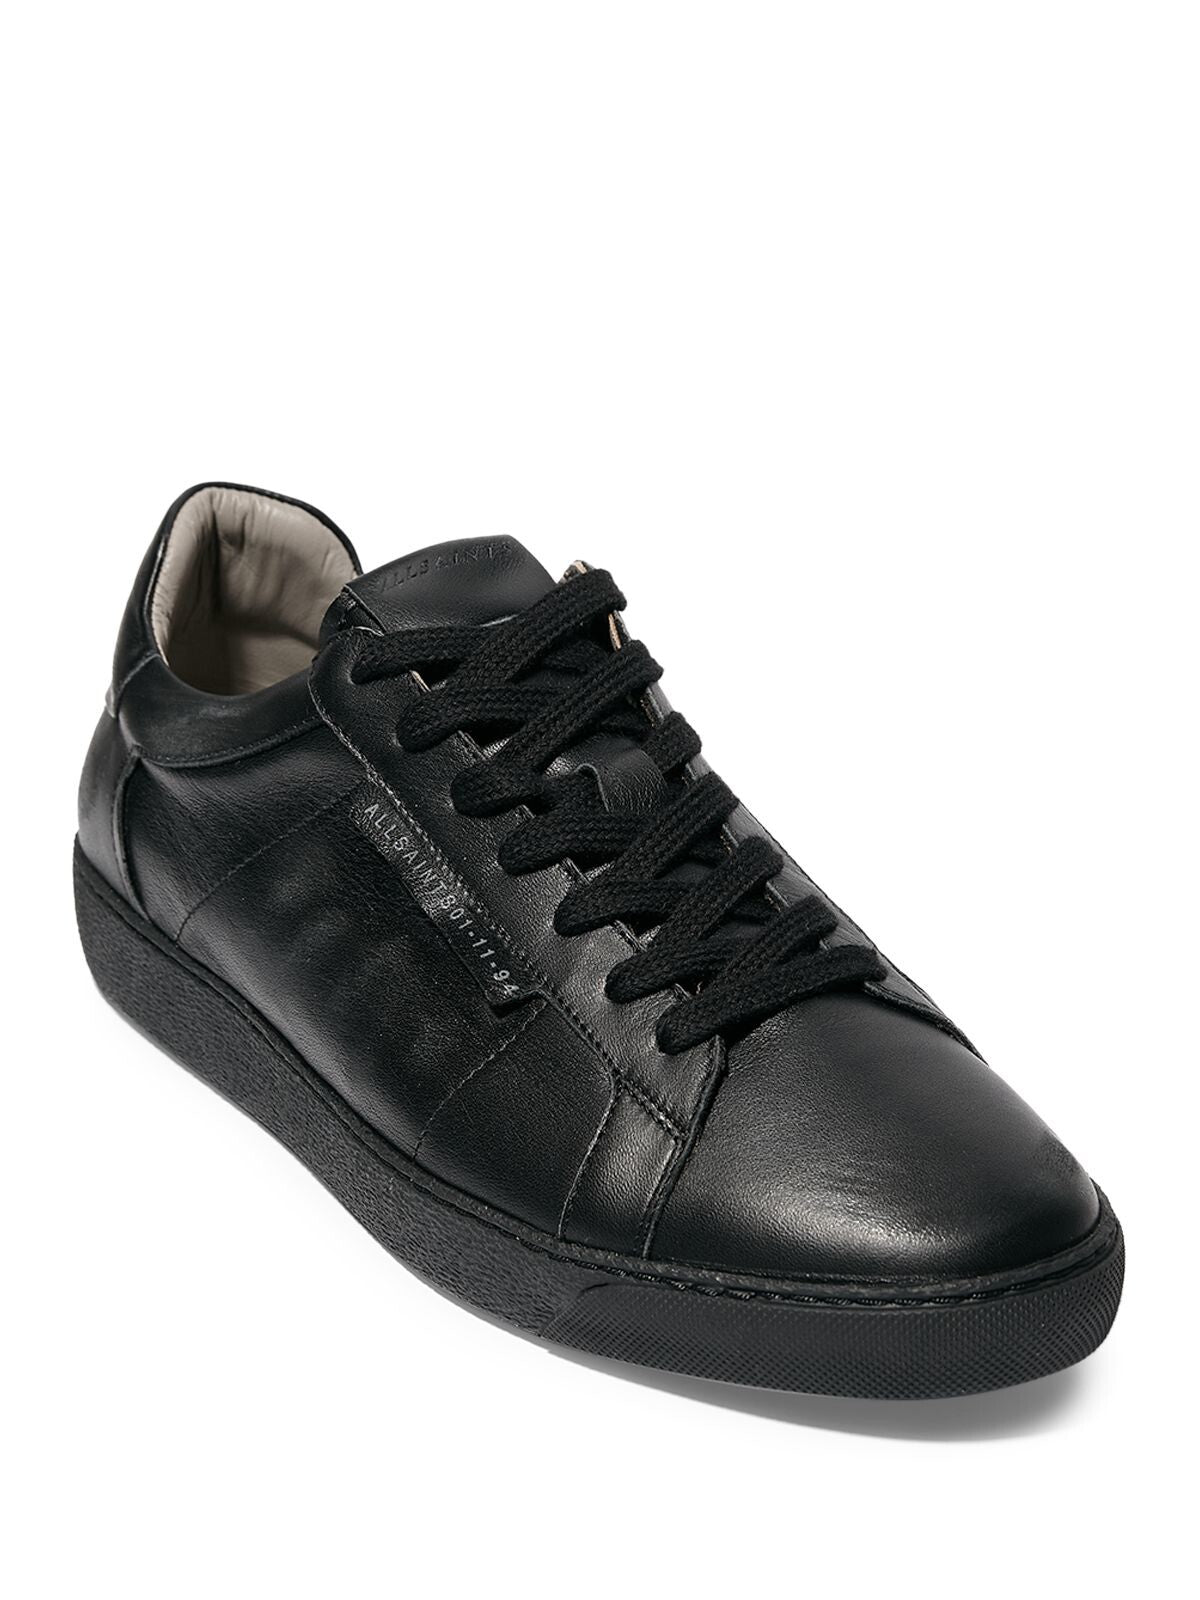 ALLSAINTS Mens Black Sheer Round Toe Platform Lace-Up Athletic Sneakers Shoes 40